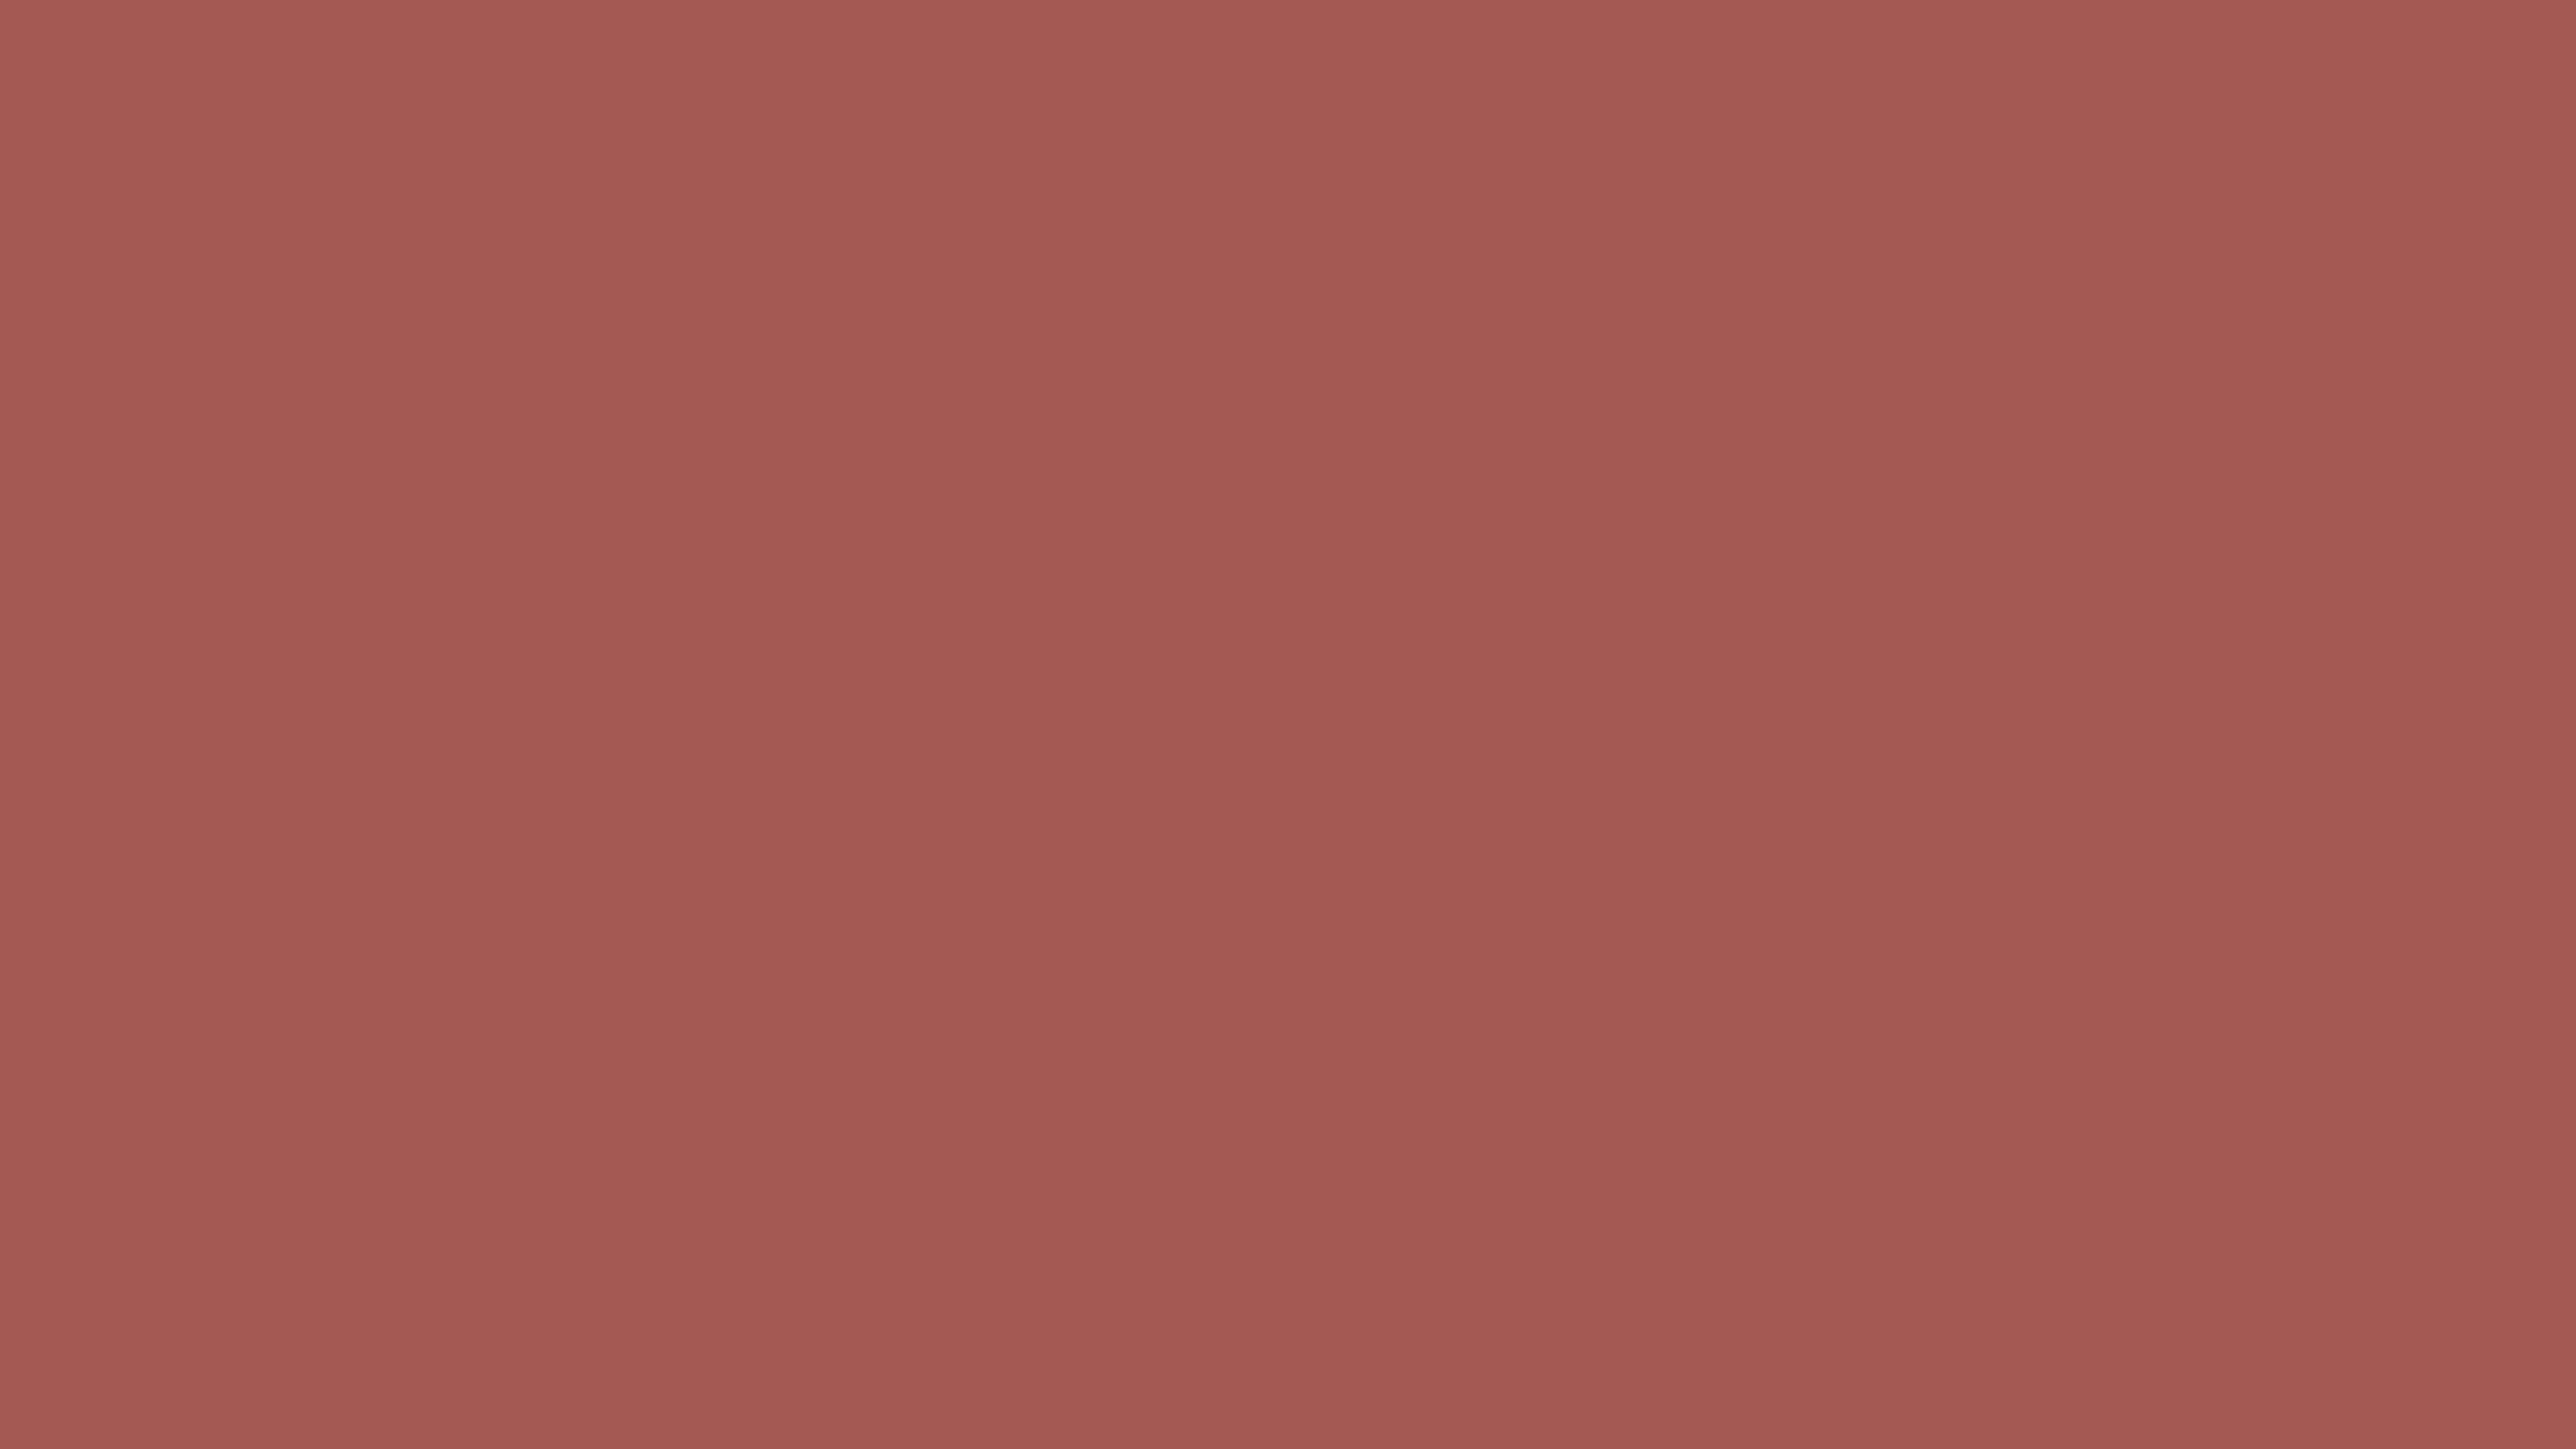 7680x4320 Redwood Solid Color Background